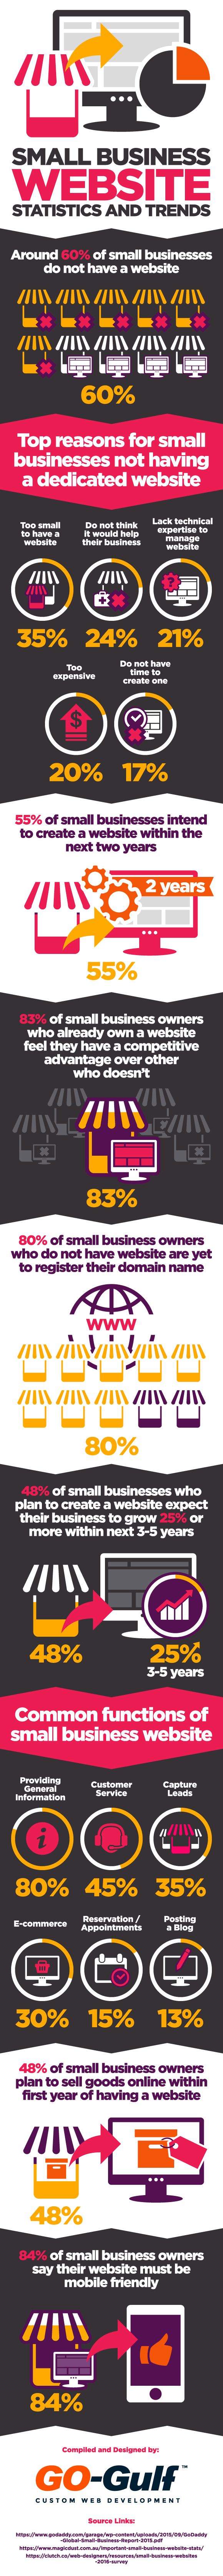 Small business Websites Statistics